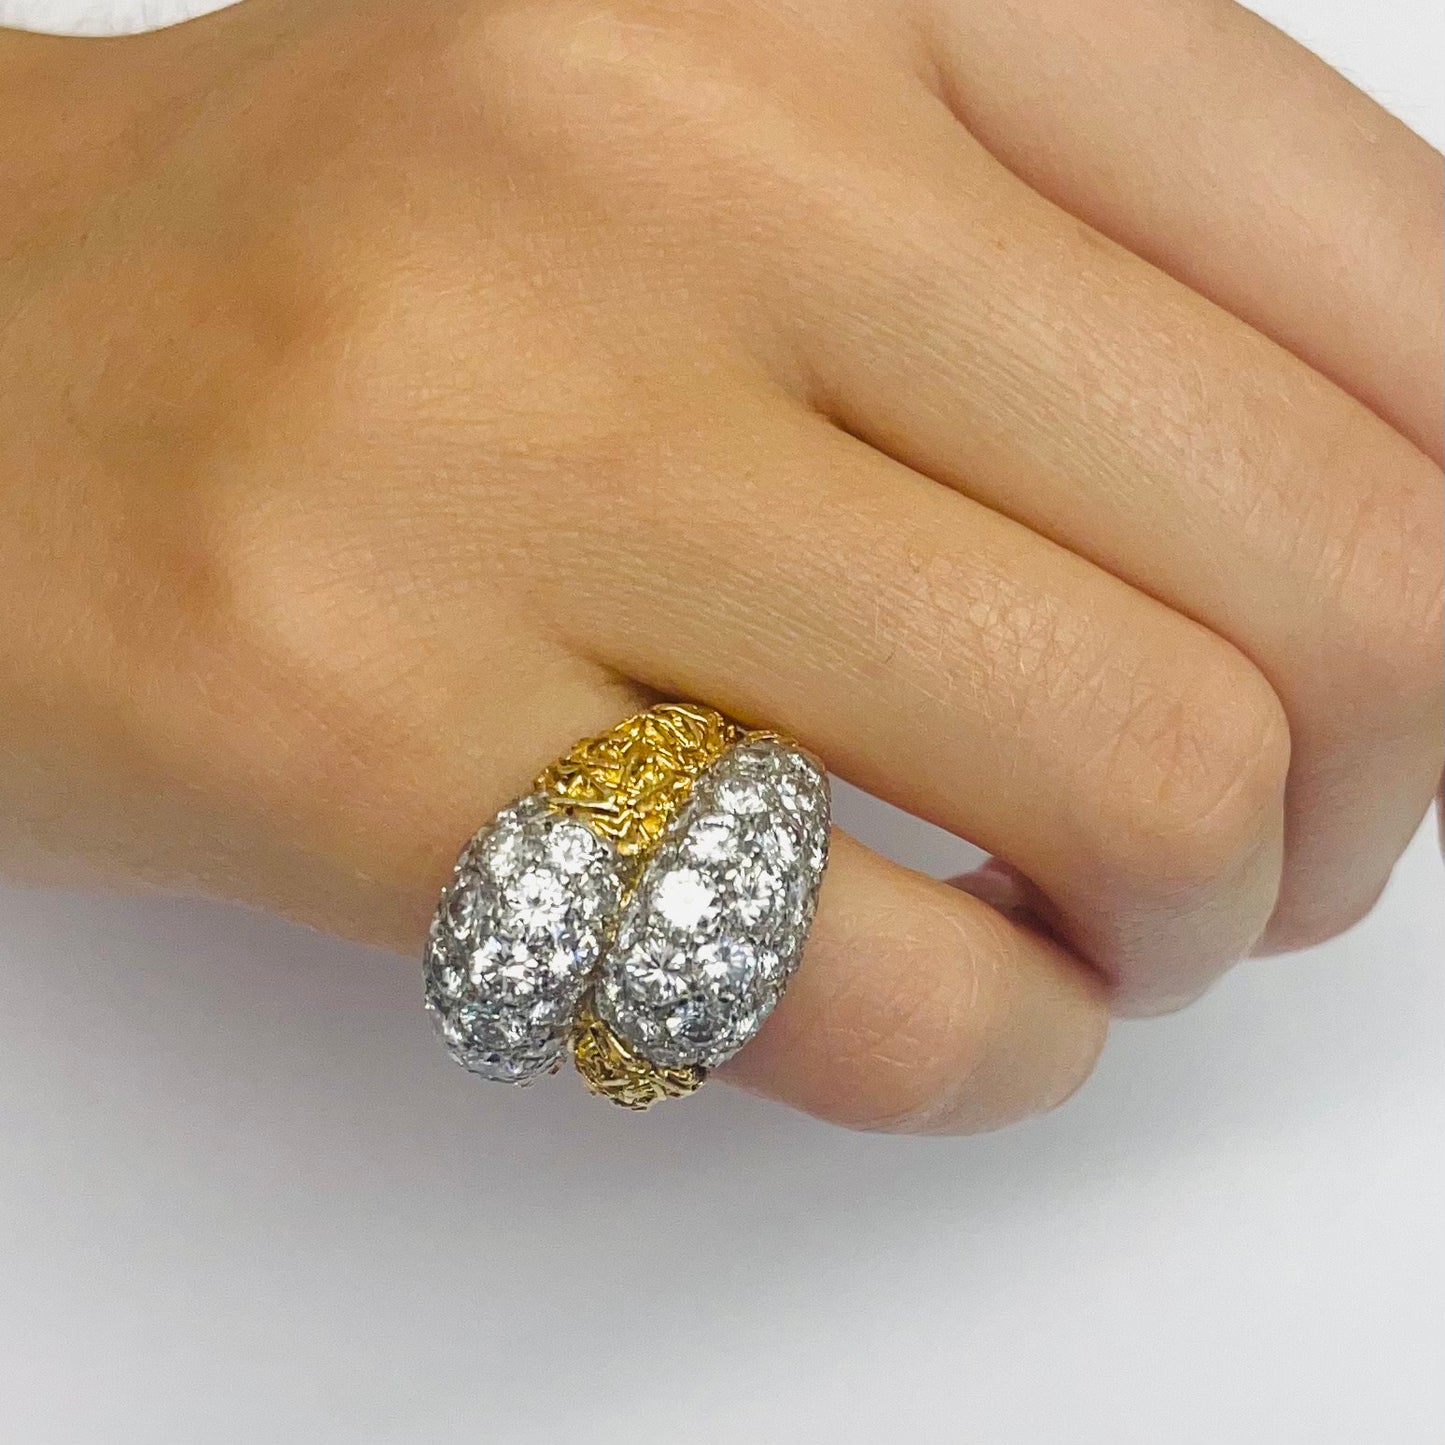 Van Cleef & Arpels 1960s 18KT Yellow Gold Diamond Ring worn on hand